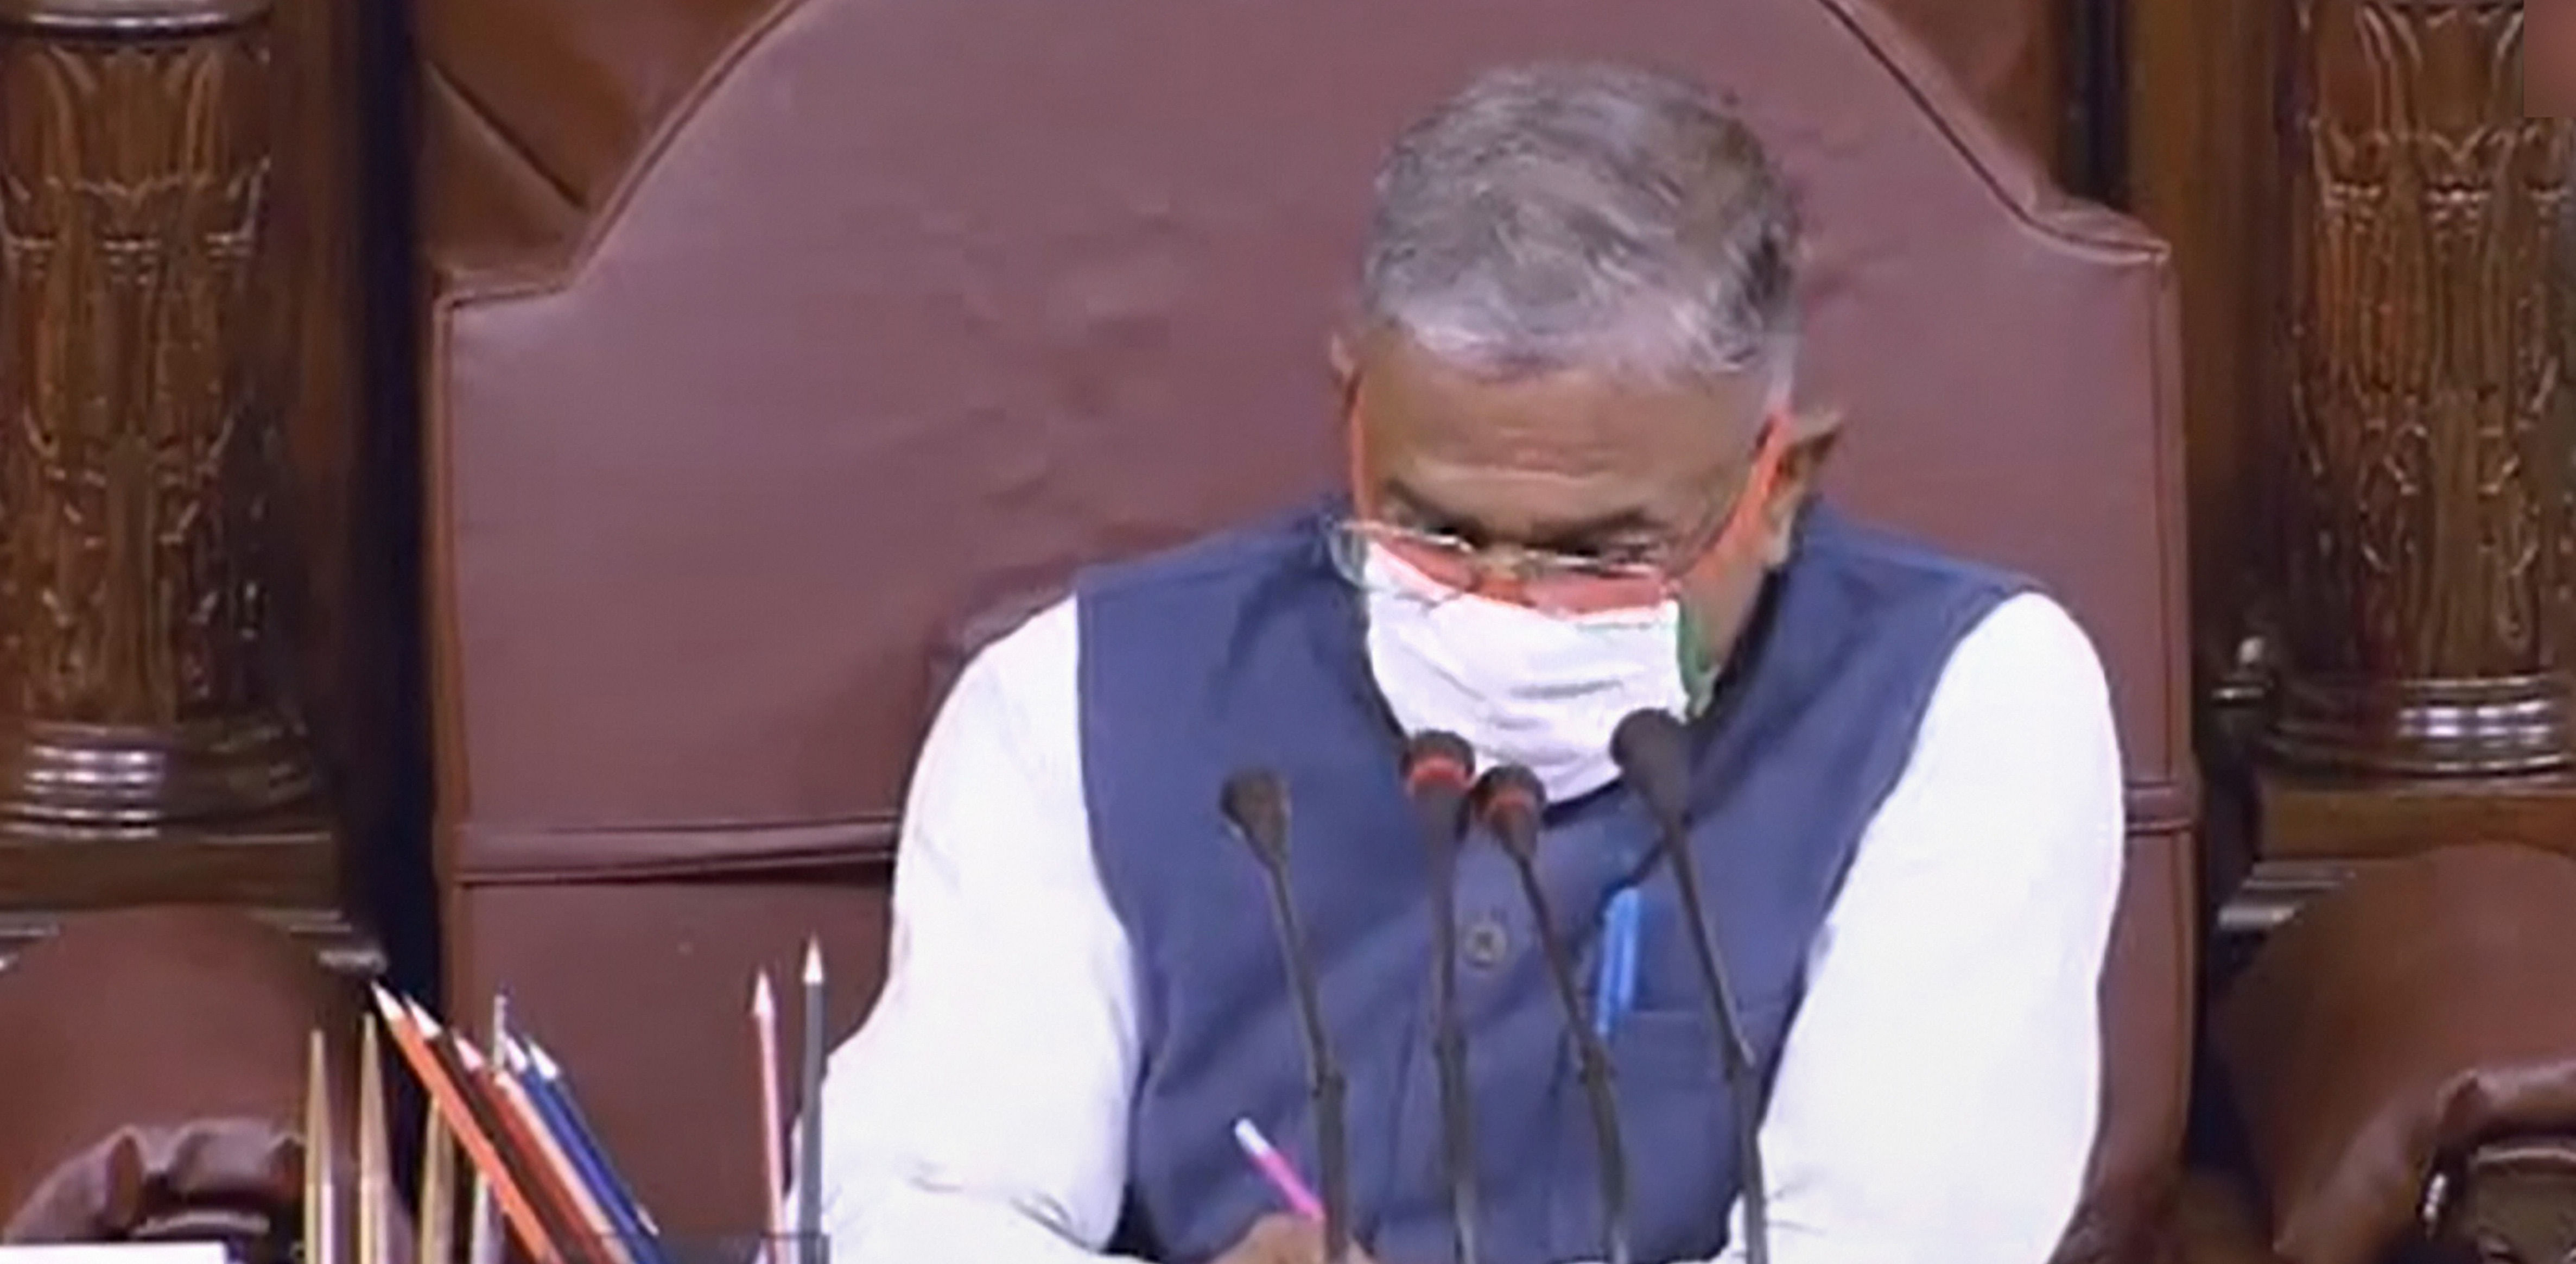 Rajya Sabha Deputy Chairman Harivansh Narayan Singh conducts proceedings during the ongoing Monsoon Session of Parliament. Credit: PTI